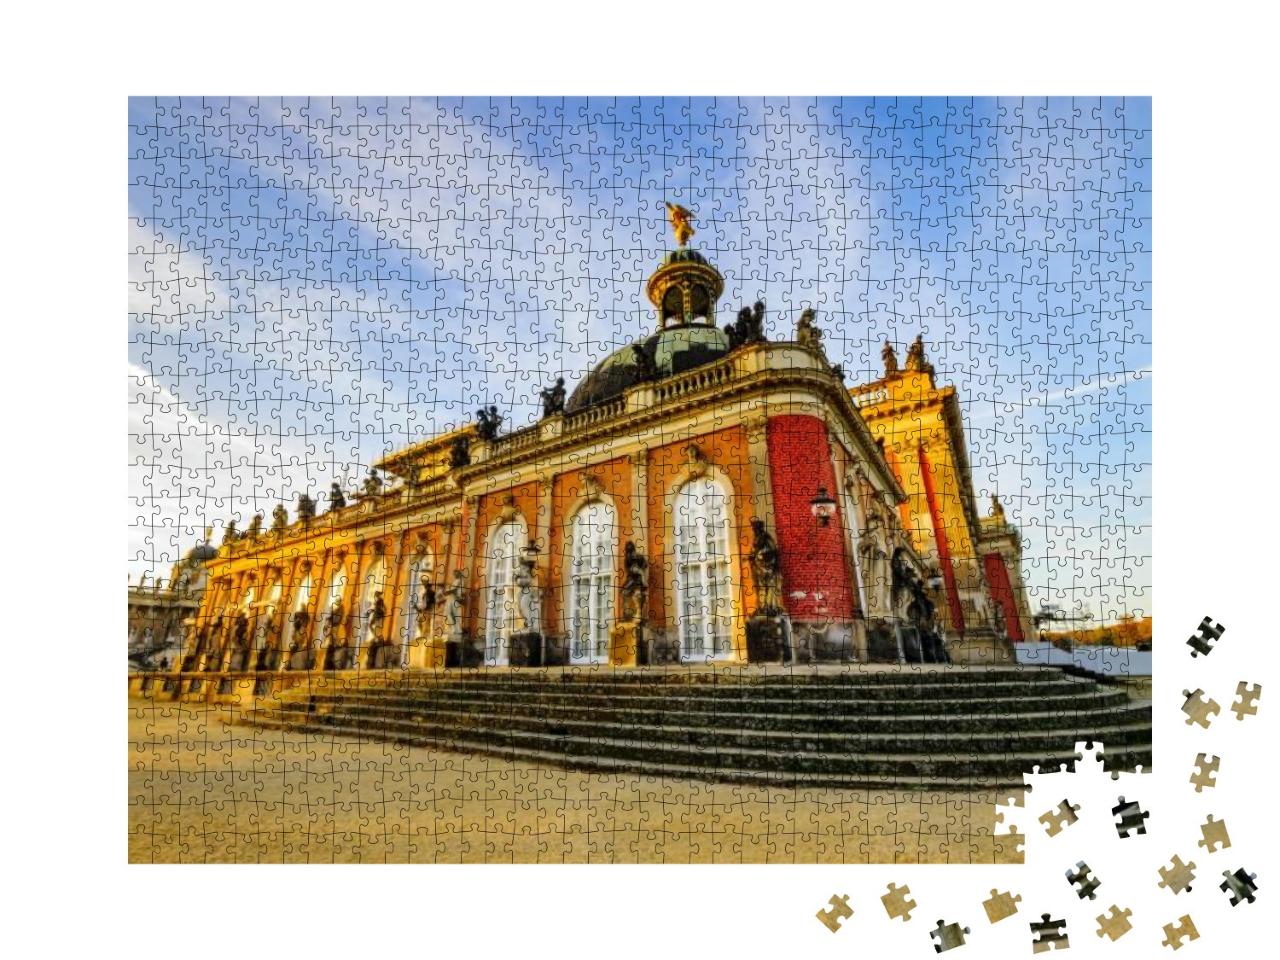 Potsdam, Germany-November 2014park Sanssouci, Potsdam, Ge... Jigsaw Puzzle with 1000 pieces